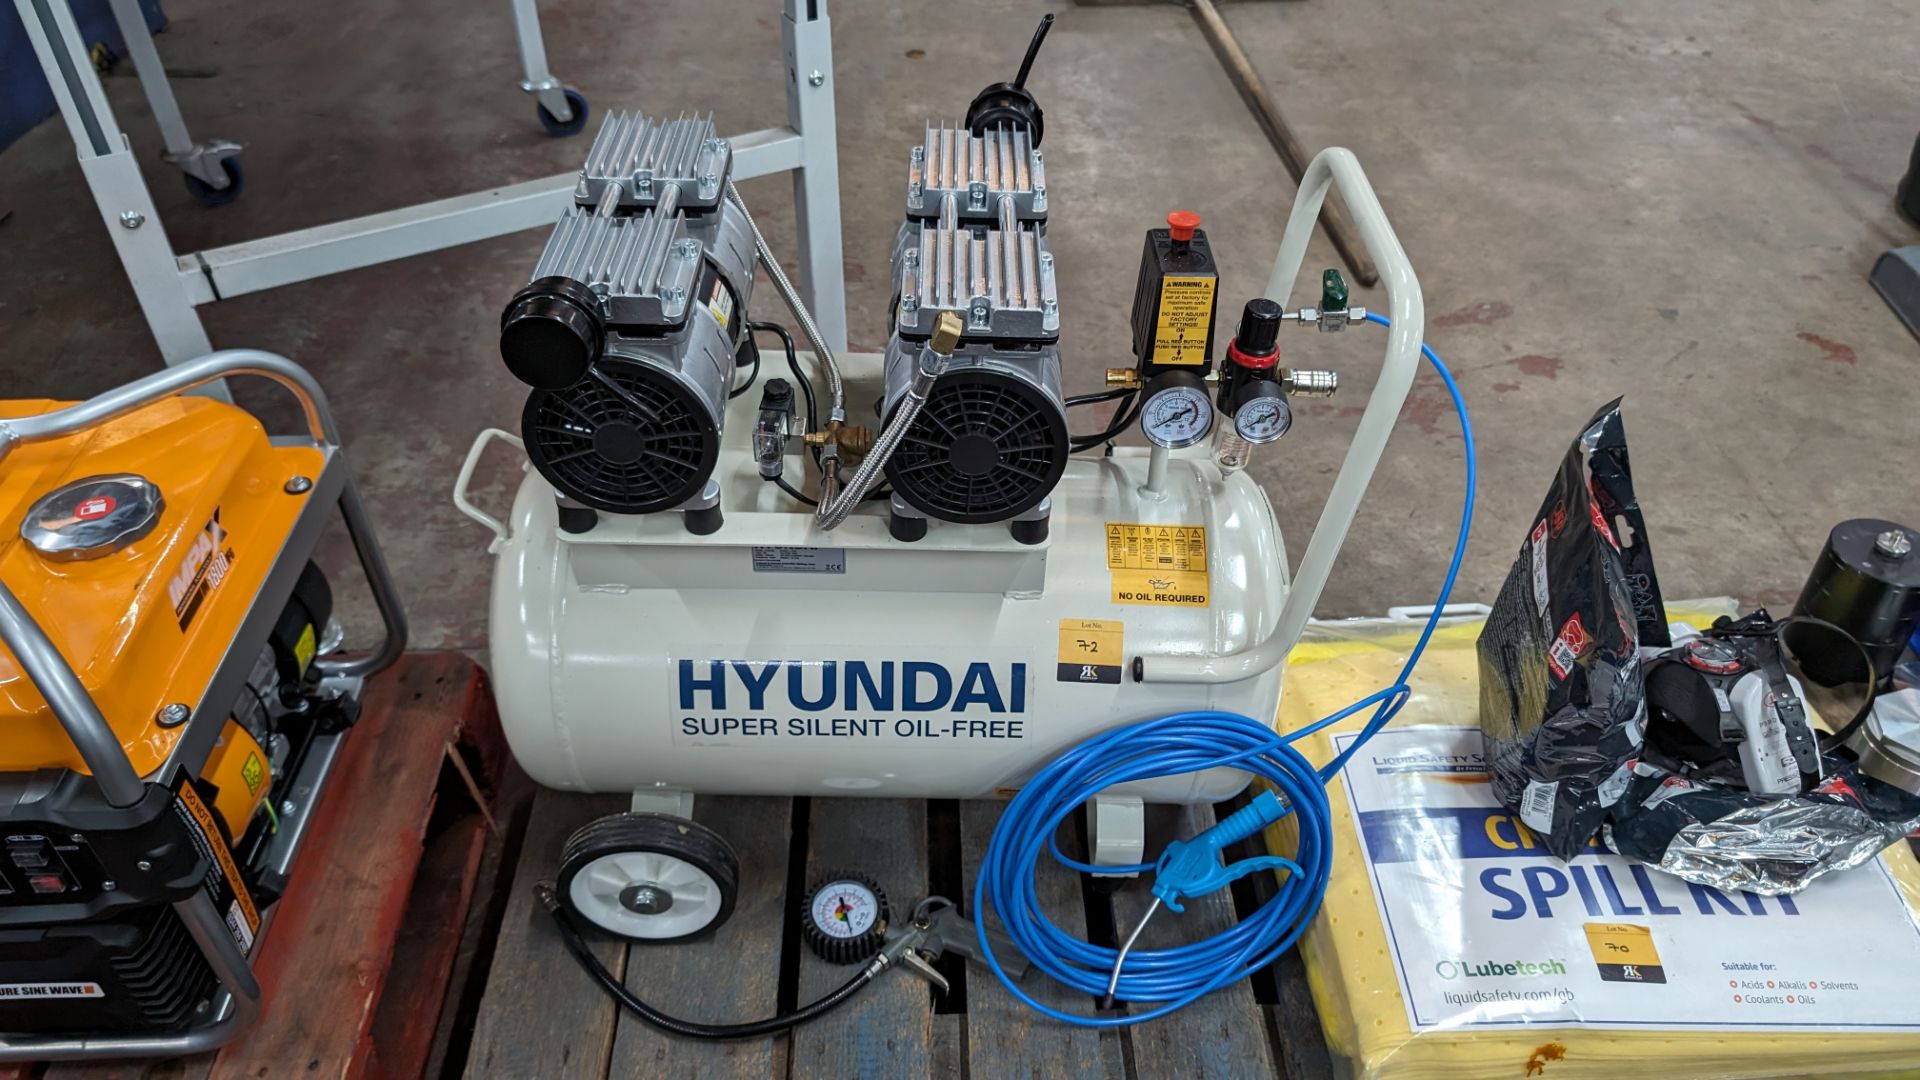 Hyundai super silent oil-free compressor system model HY27550